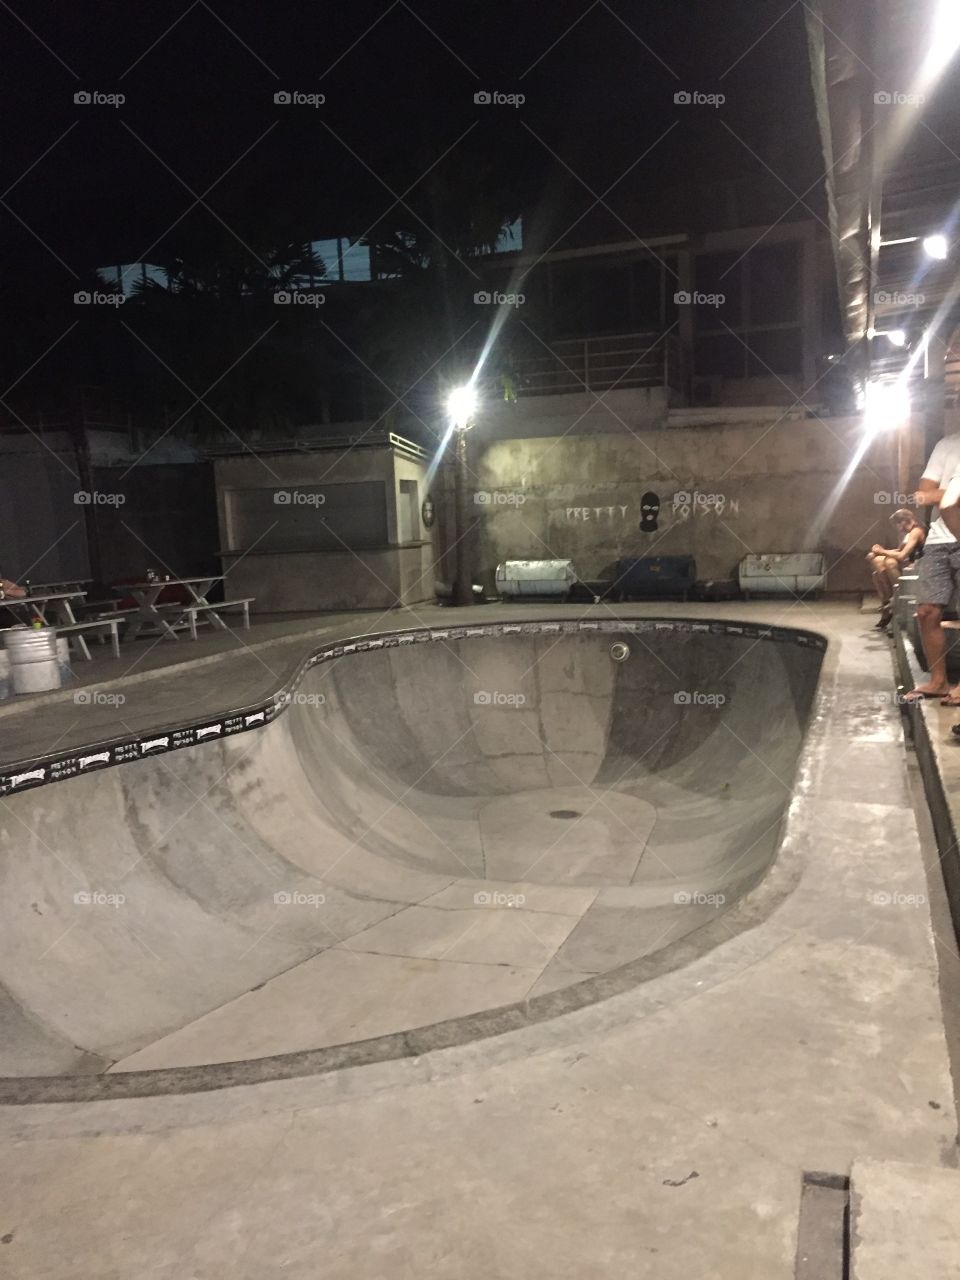 Skate bowl